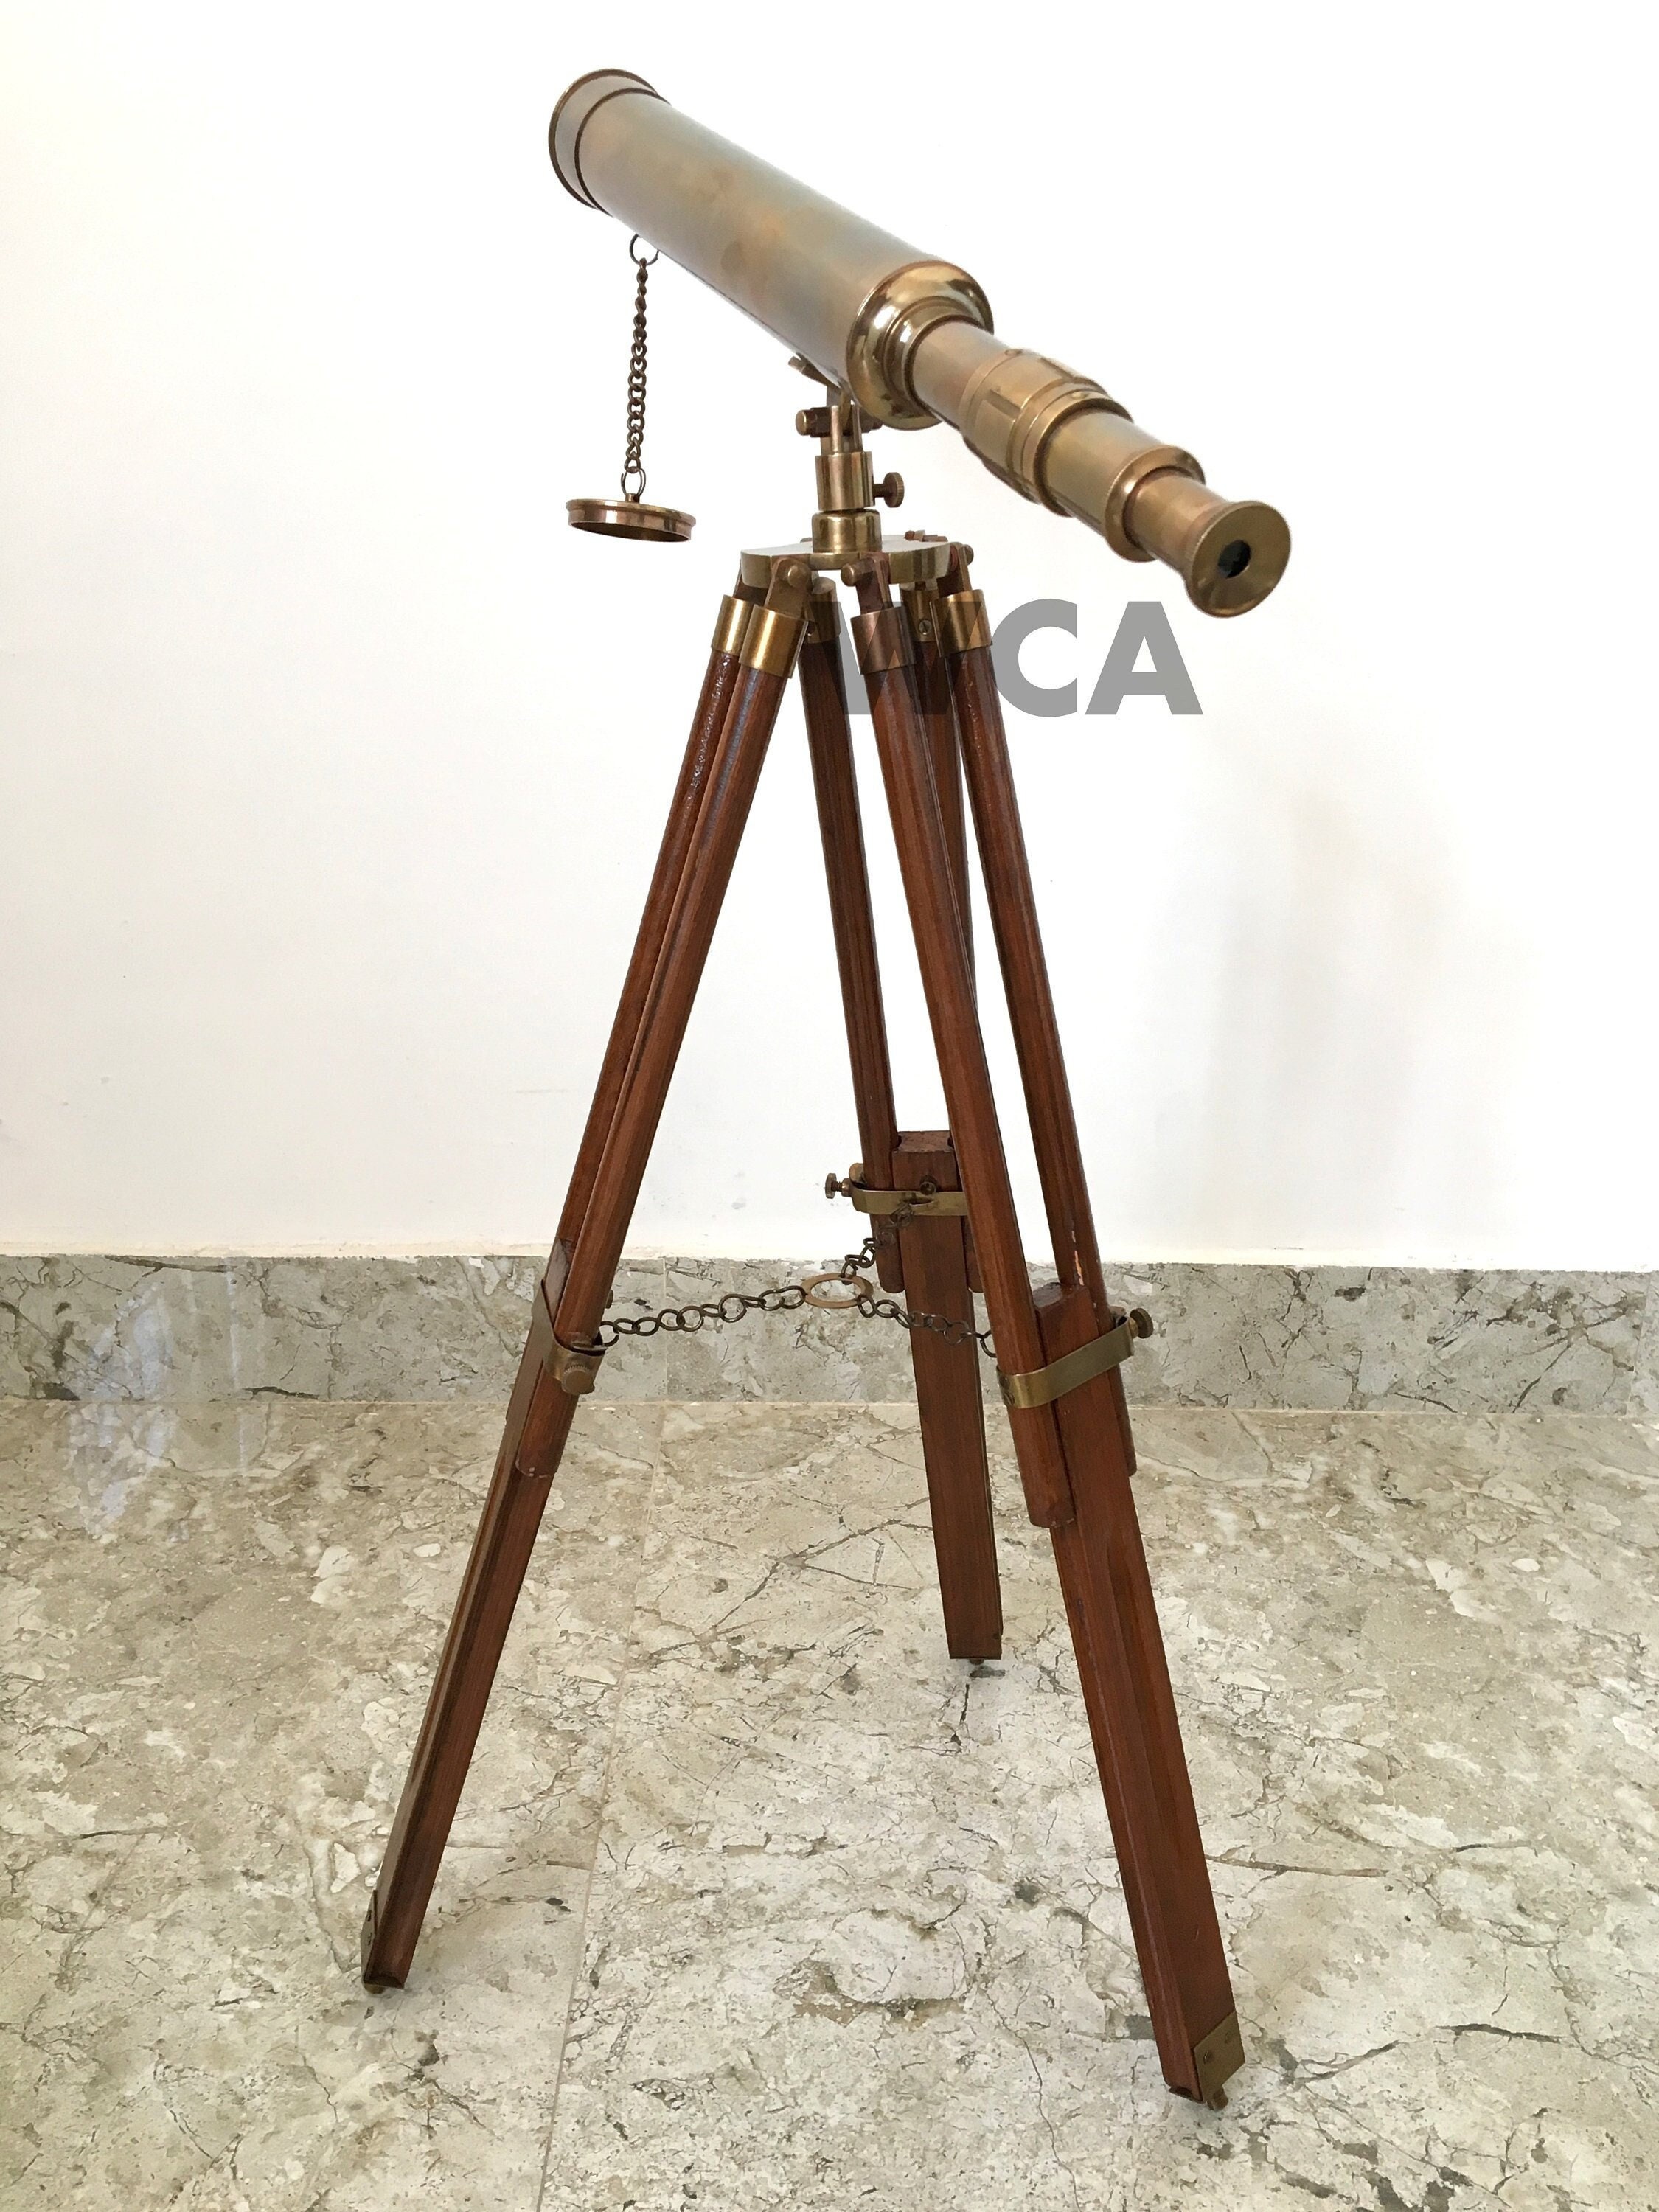 Antique Brass Spyglass Telescope With Wooden Tripod Marine Scope 